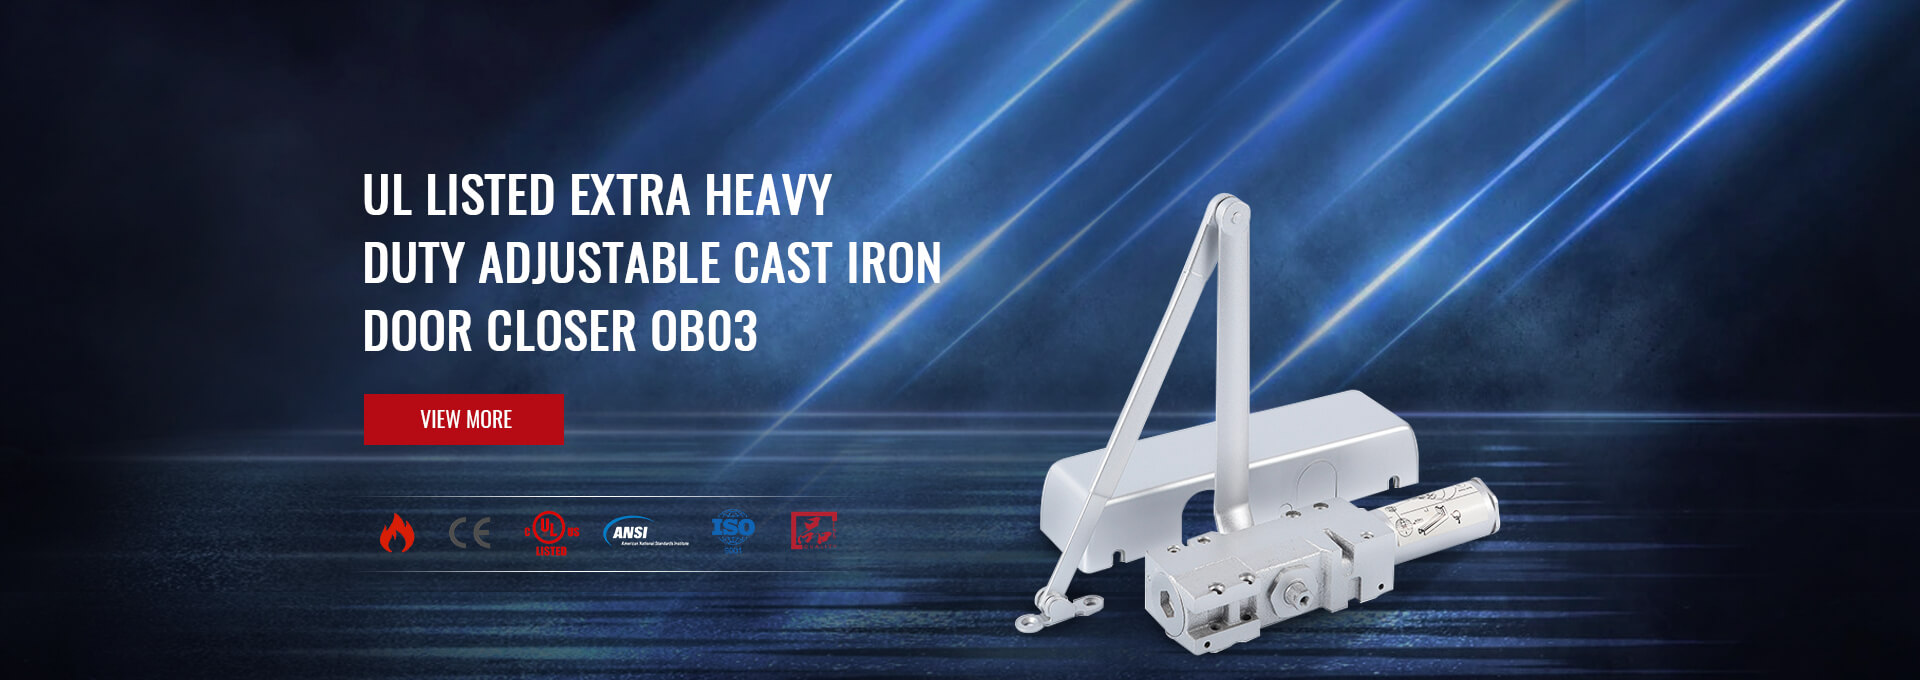 UL listed extra heavy duty adjustable cast iron door closer OB03